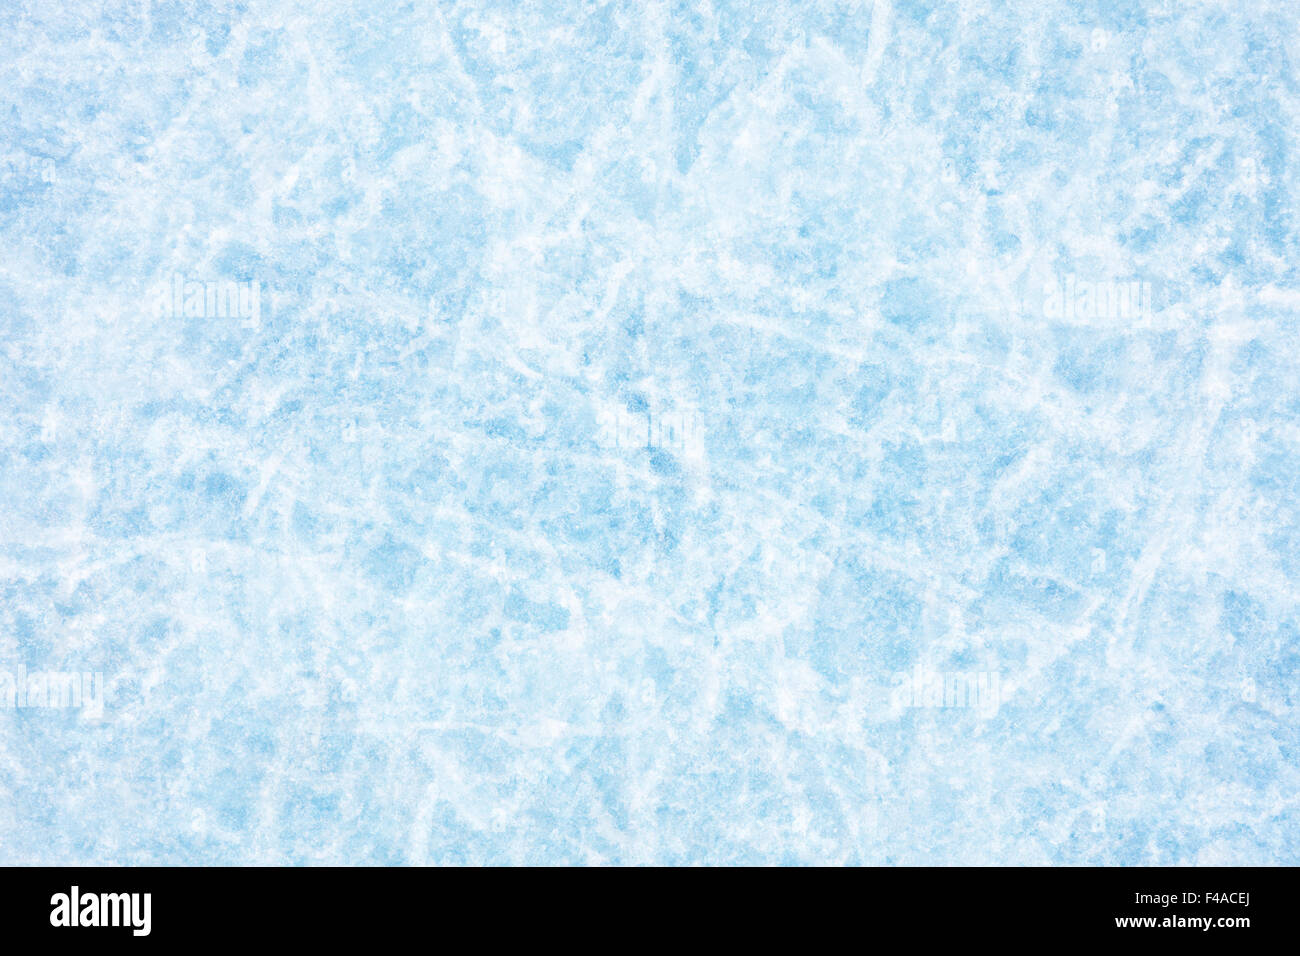 Ice texture Stock Photo